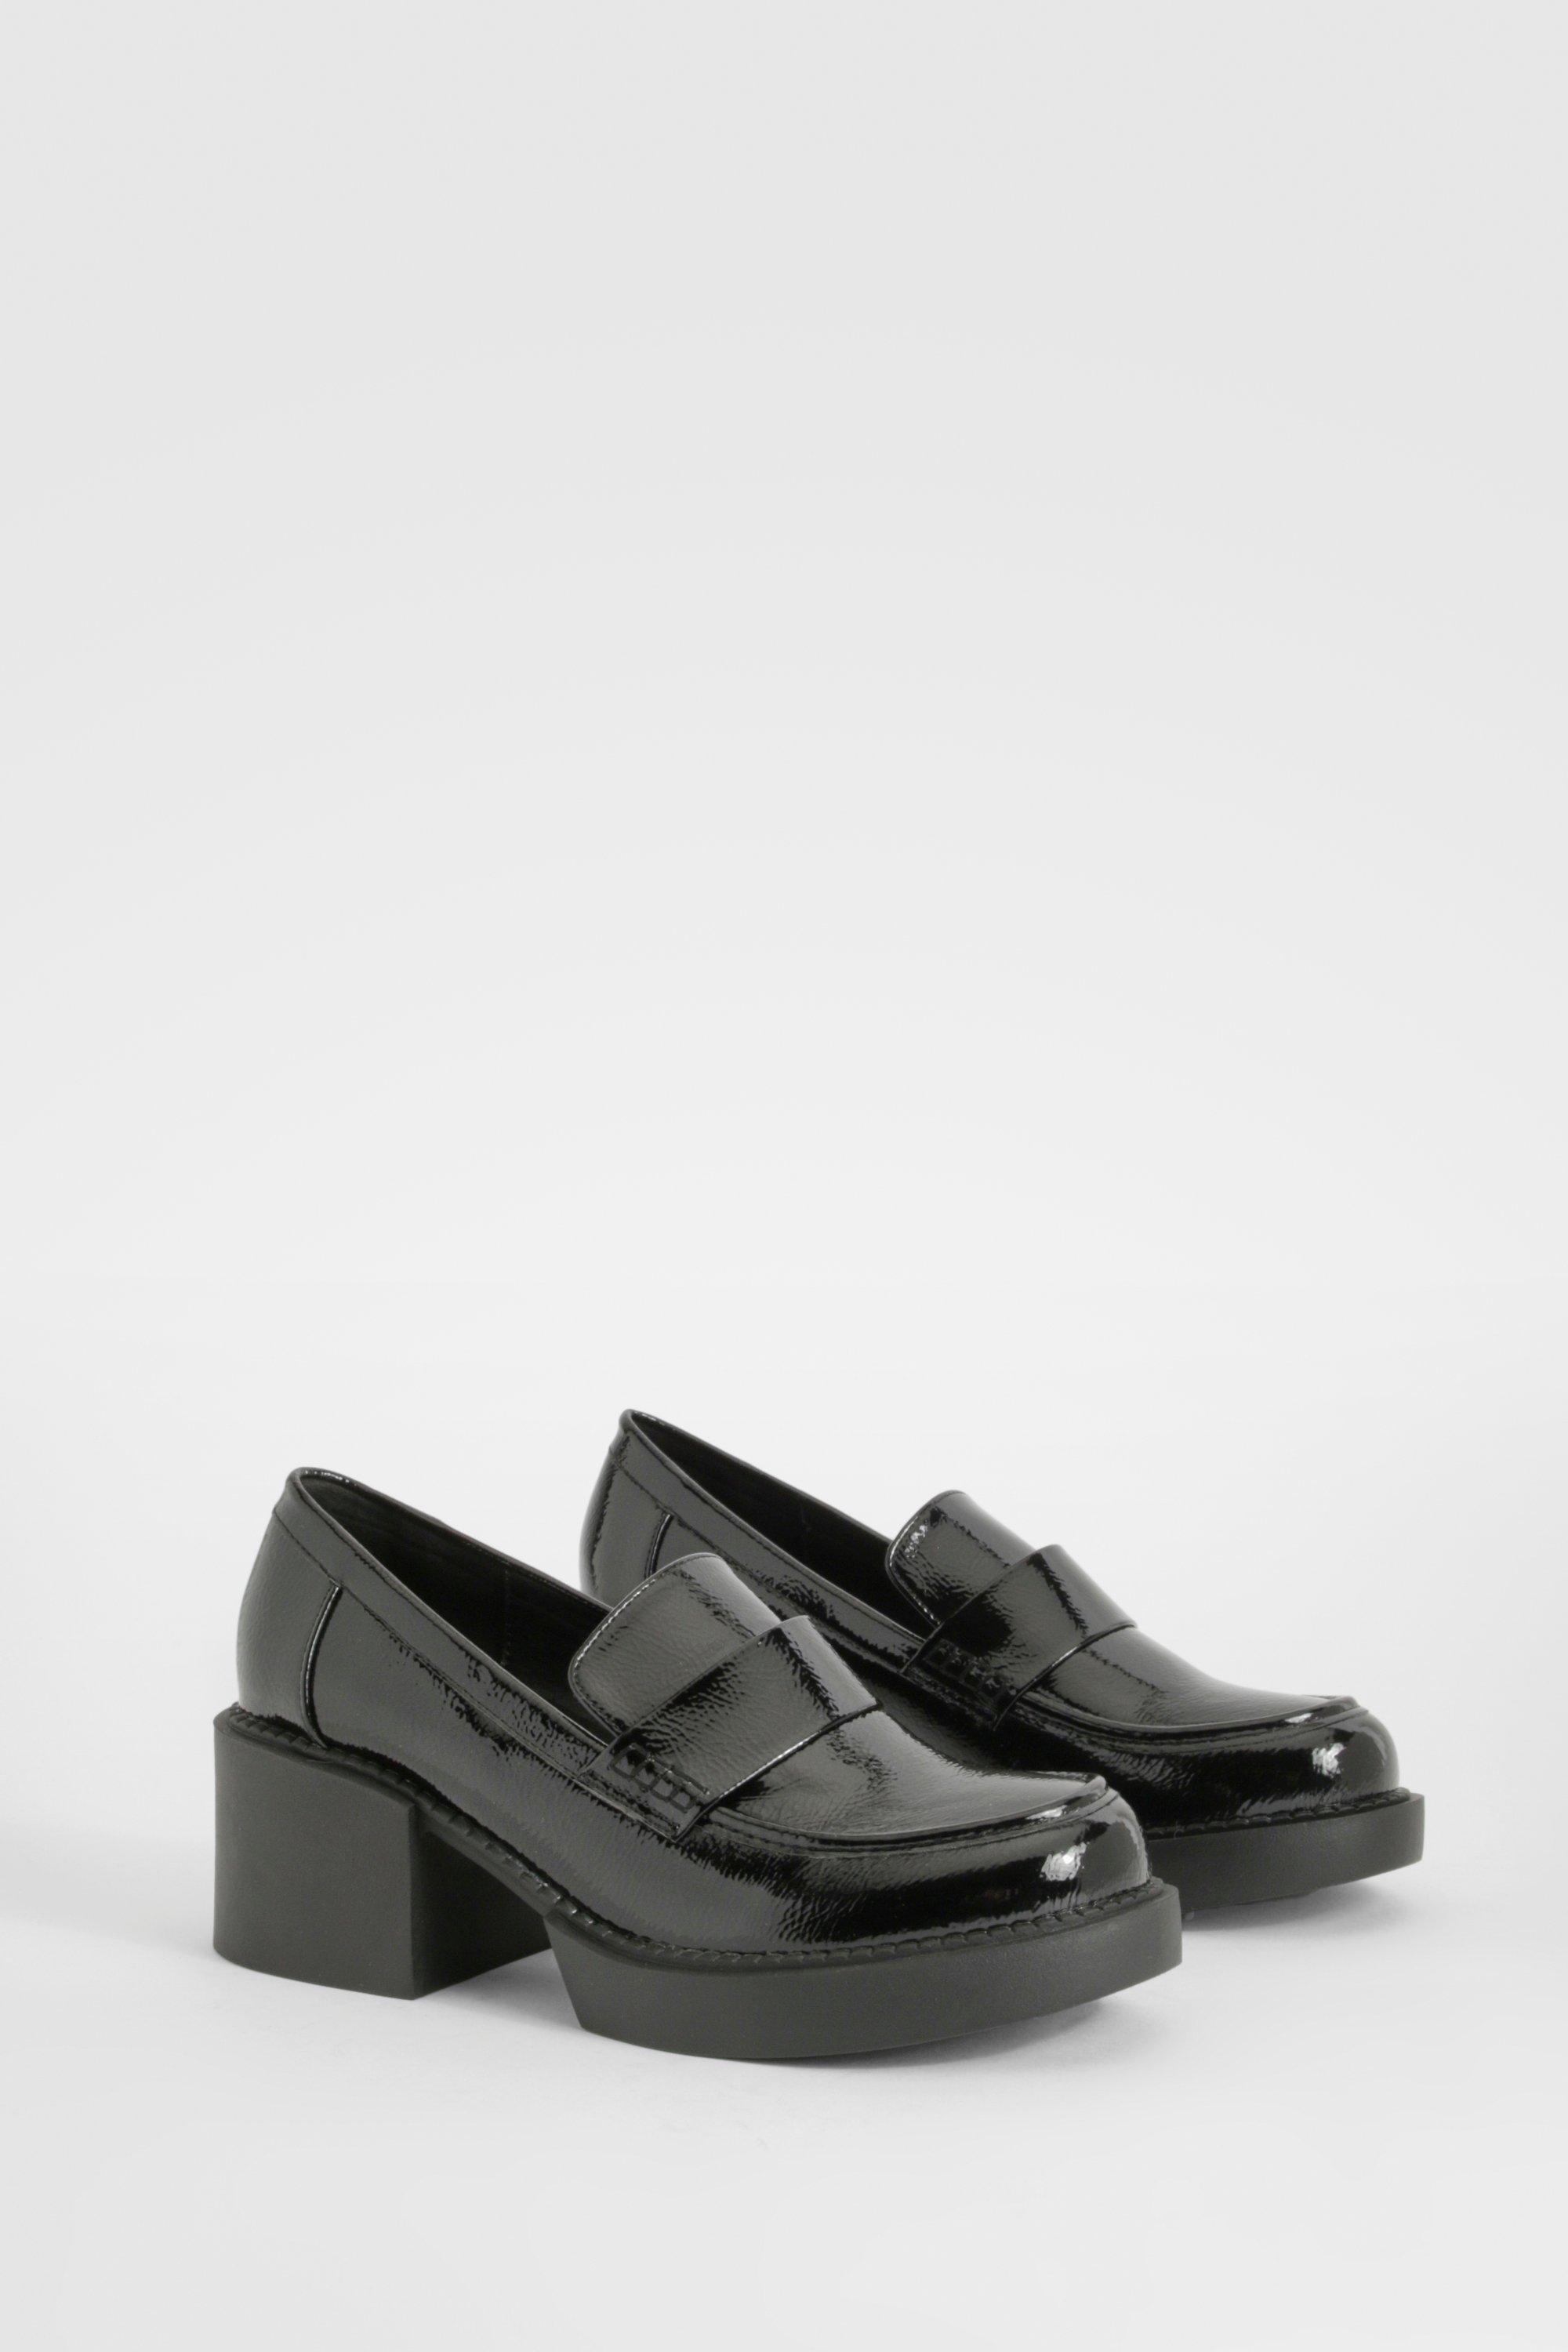 Boohoo Chunky Heeled Patent Loafers, Black